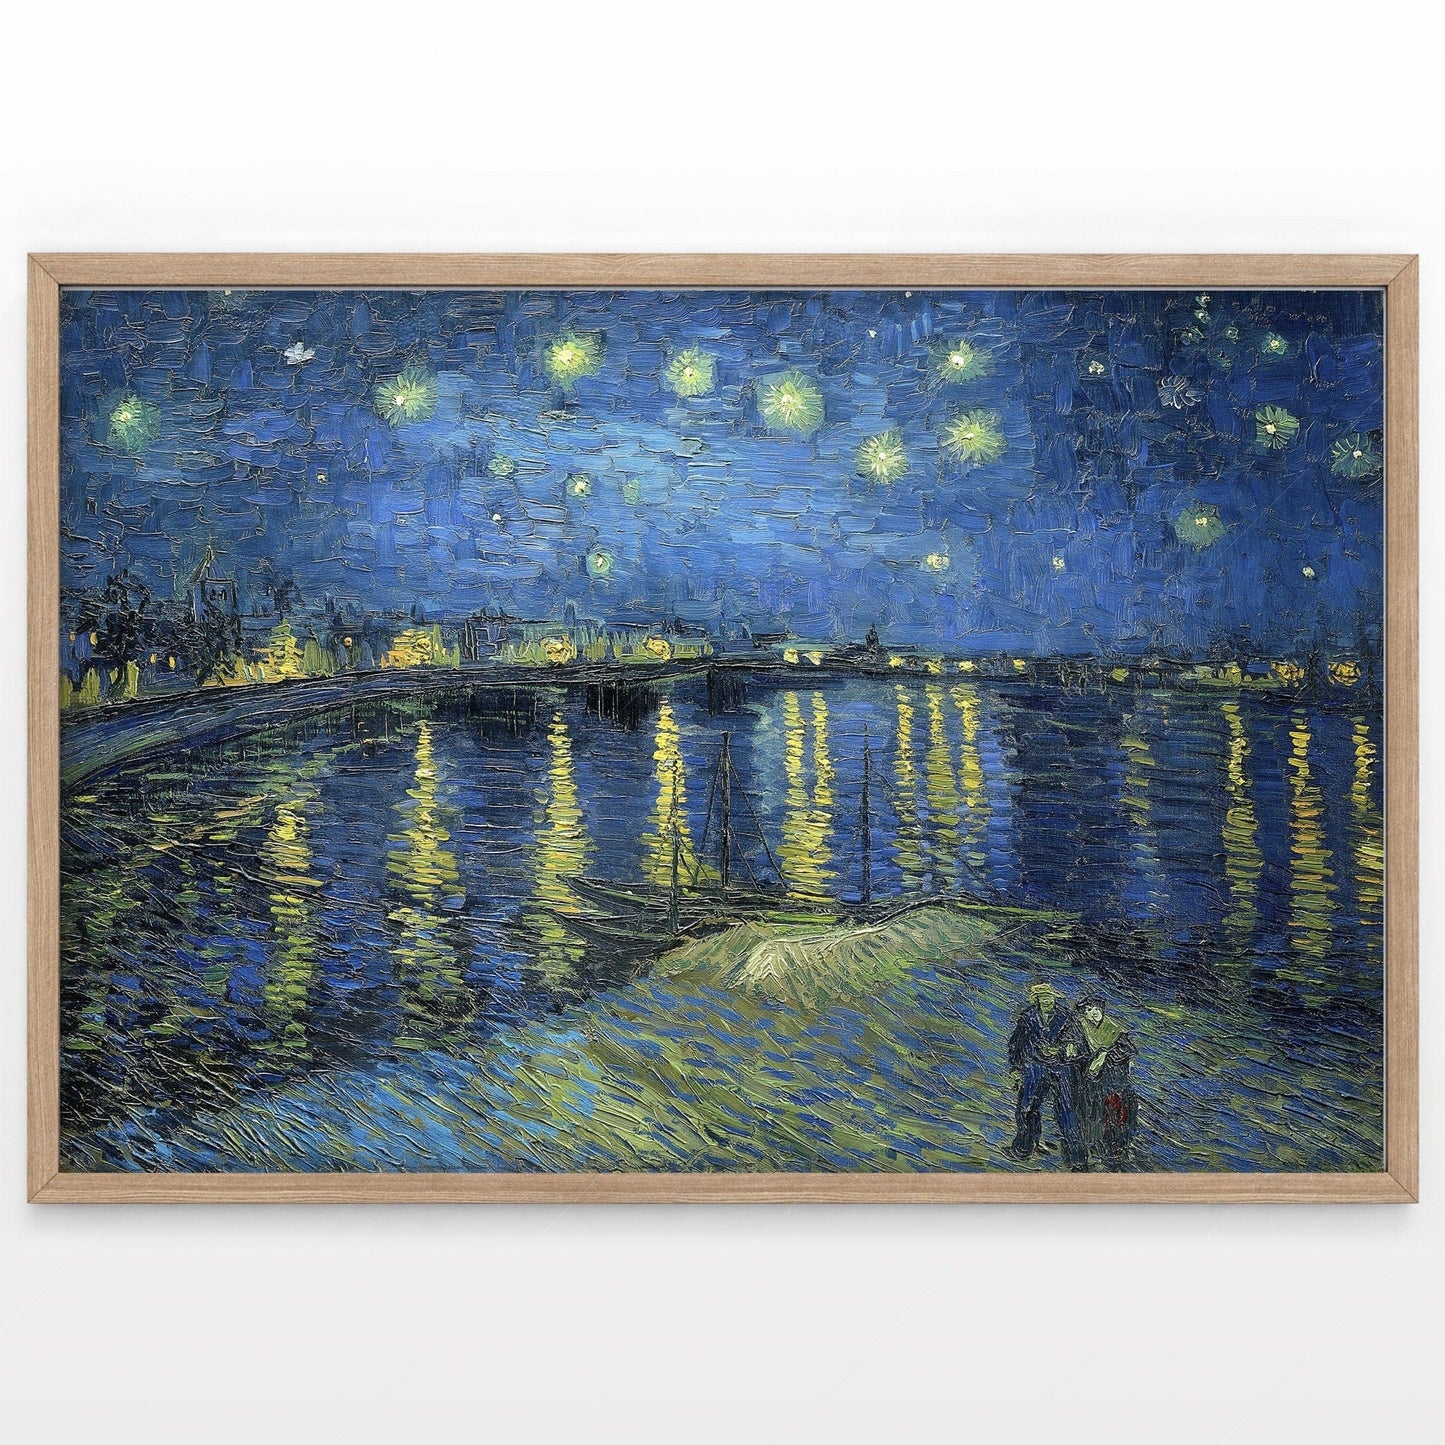 Home Poster Decor Van Gogh Print, Starry Night Over the Rhone, Famous artwork, Landscape Art, Impressionist, Wedding Gift, Living Room Decor, Vincent Van Gogh